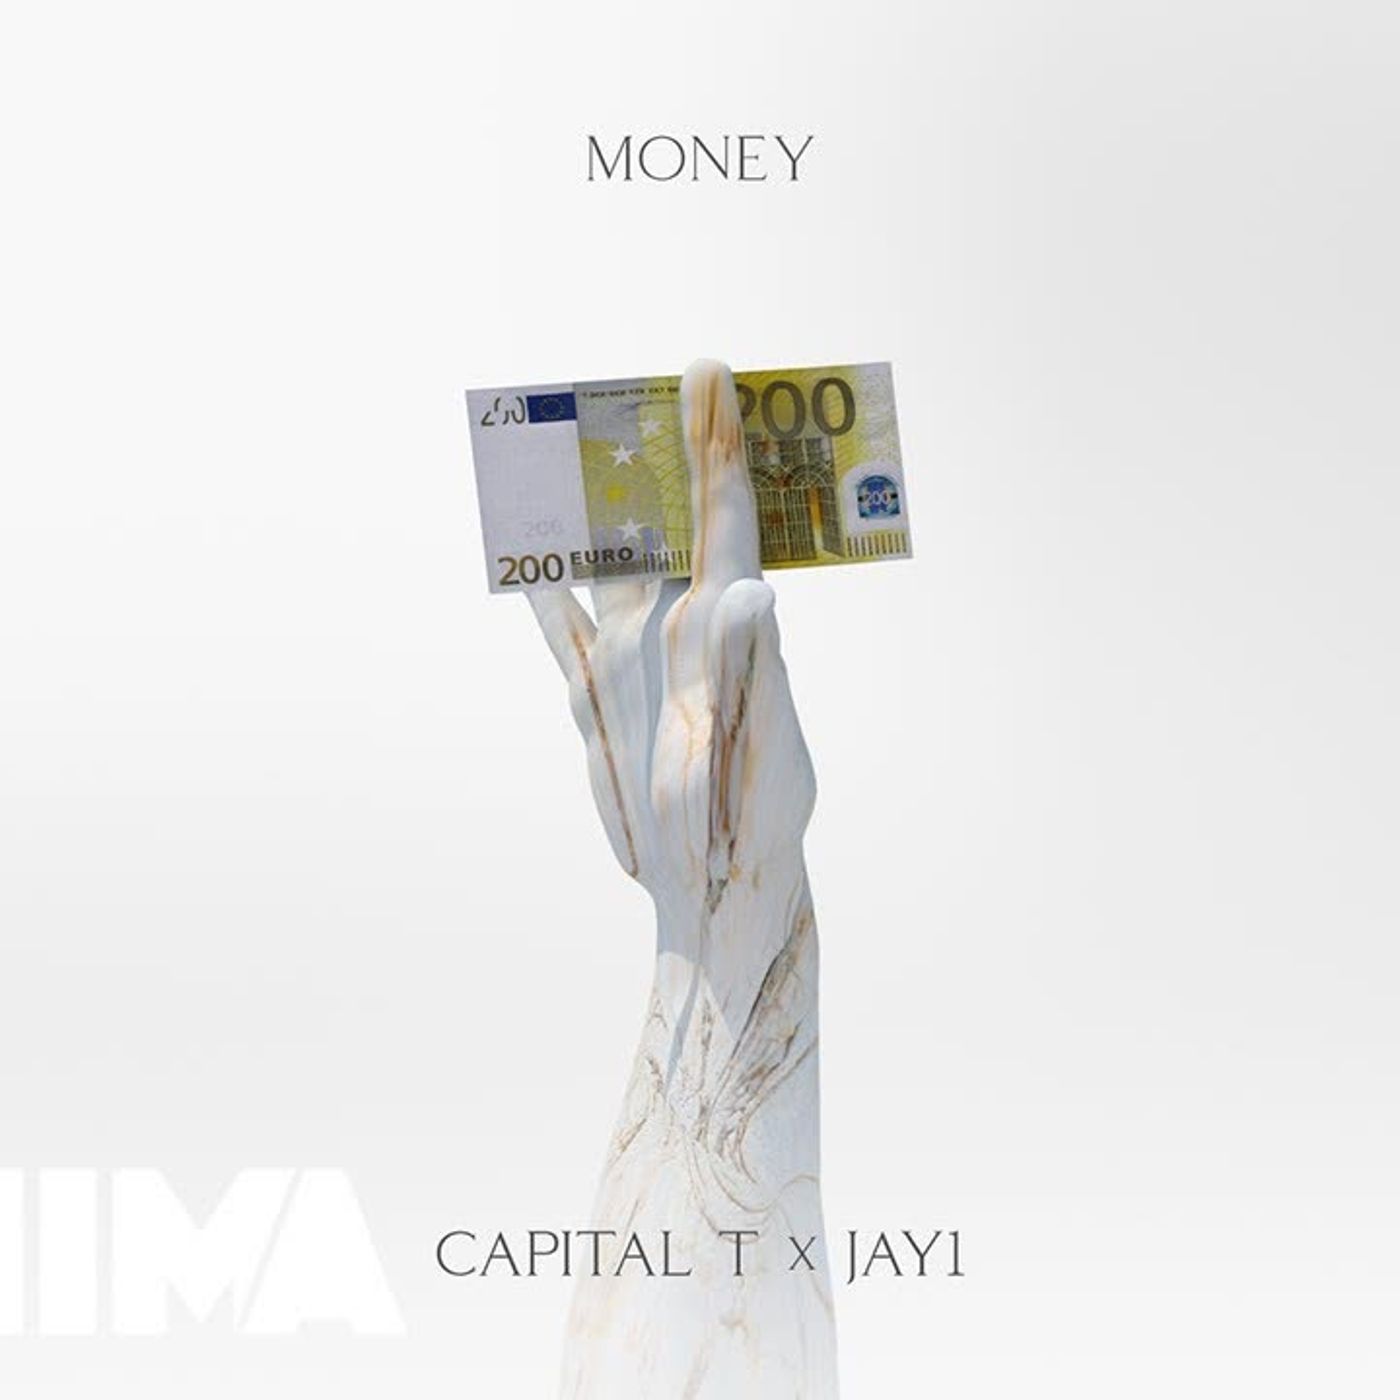 Capital T x Jay1 - Money